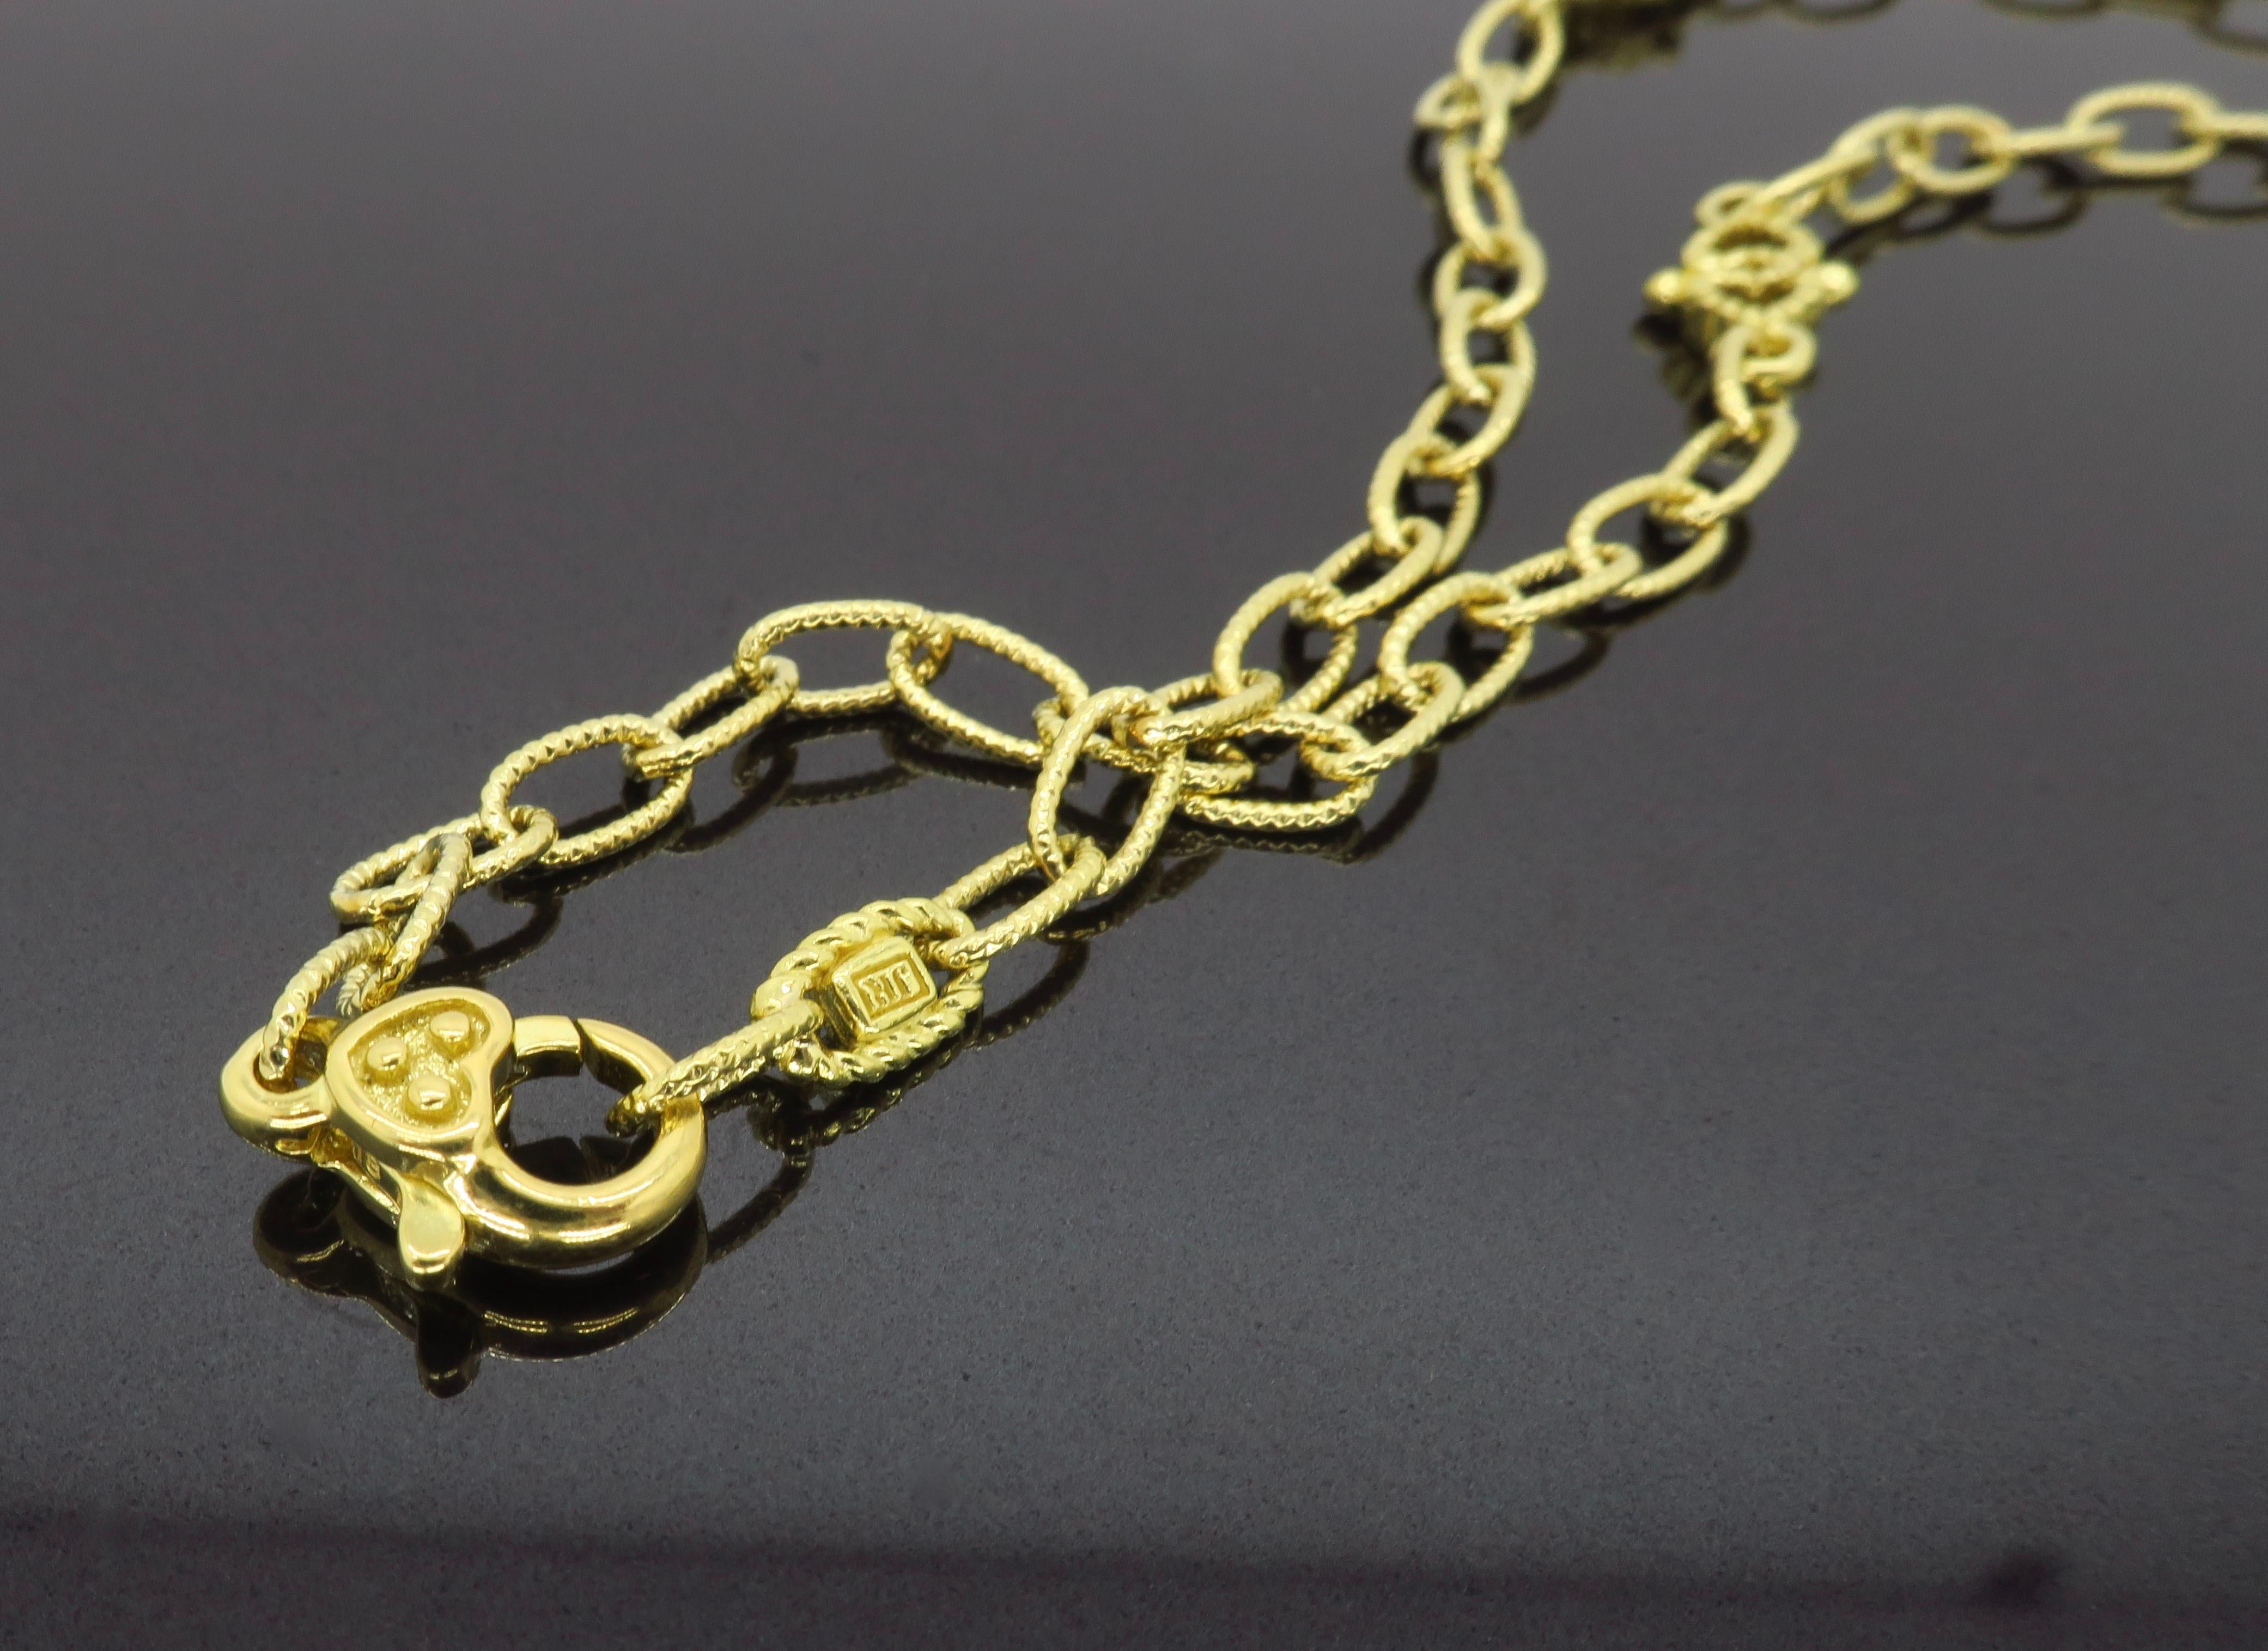 Cushion Cut Green Amethyst and Diamond Pendant Necklace in 18 Karat Yellow Gold